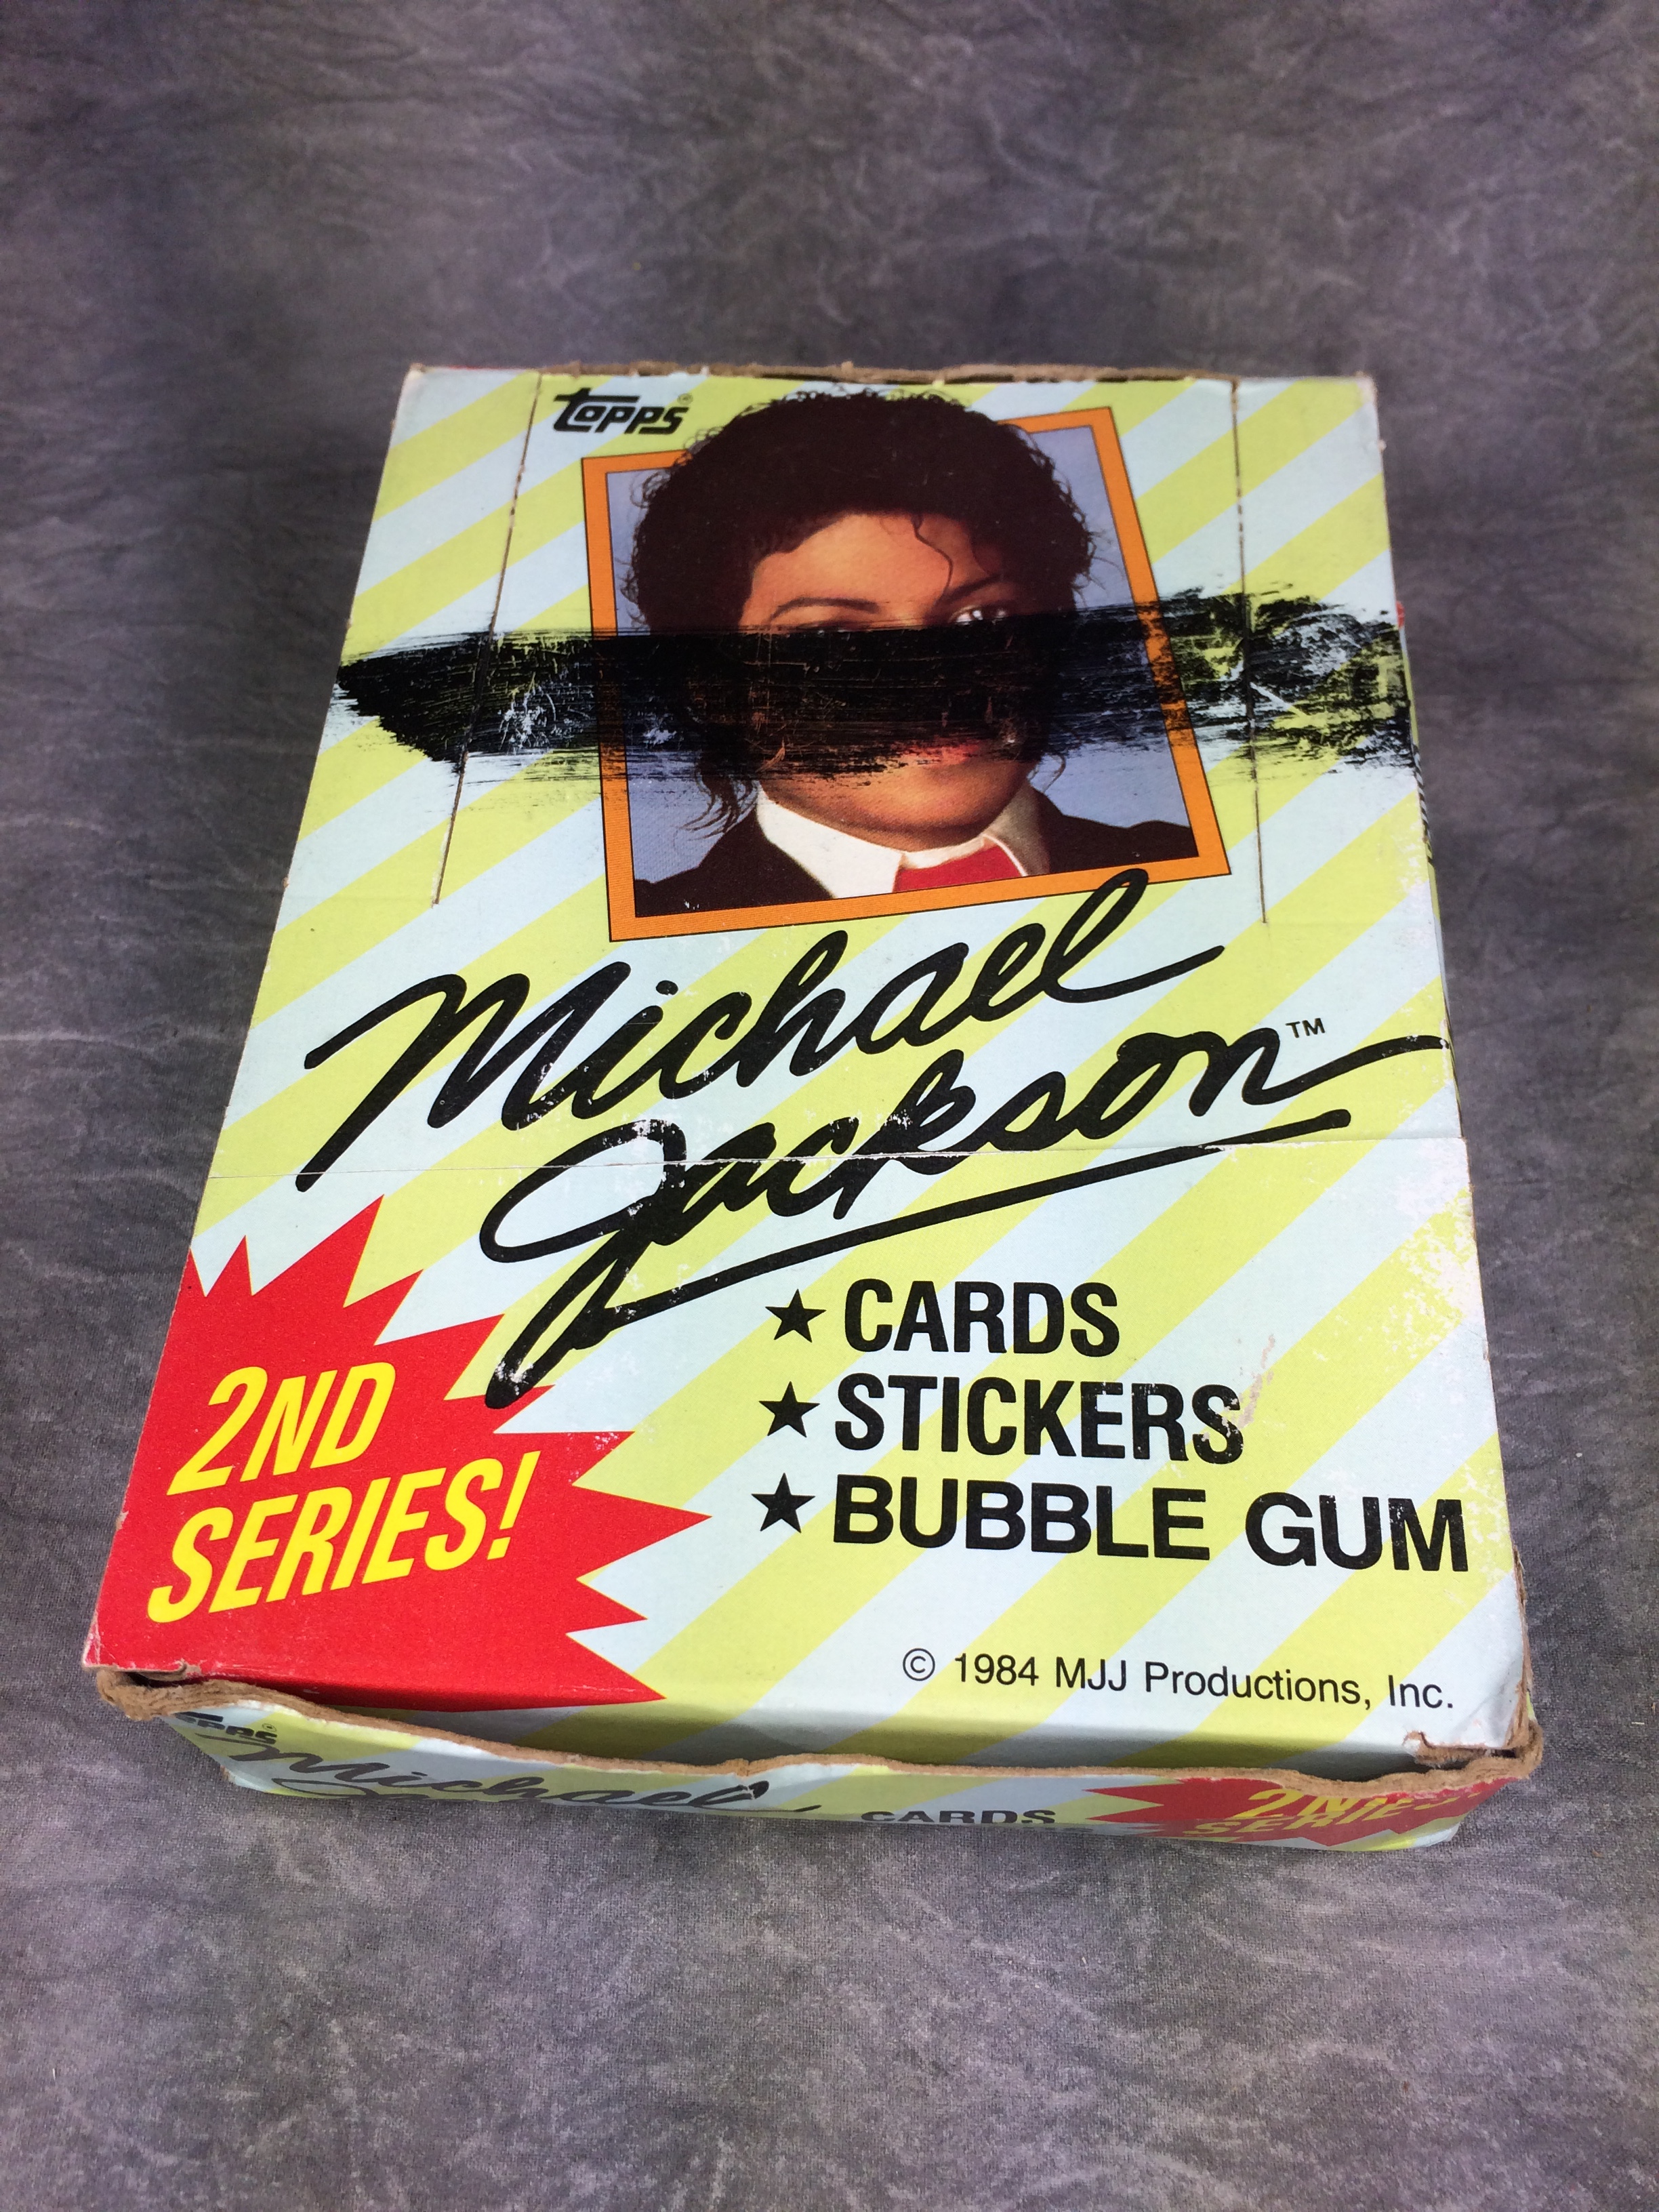 1984 TOPPS MJJ PRODUCTIONS INC MICHAEL JACKSON TRADING CARDS 